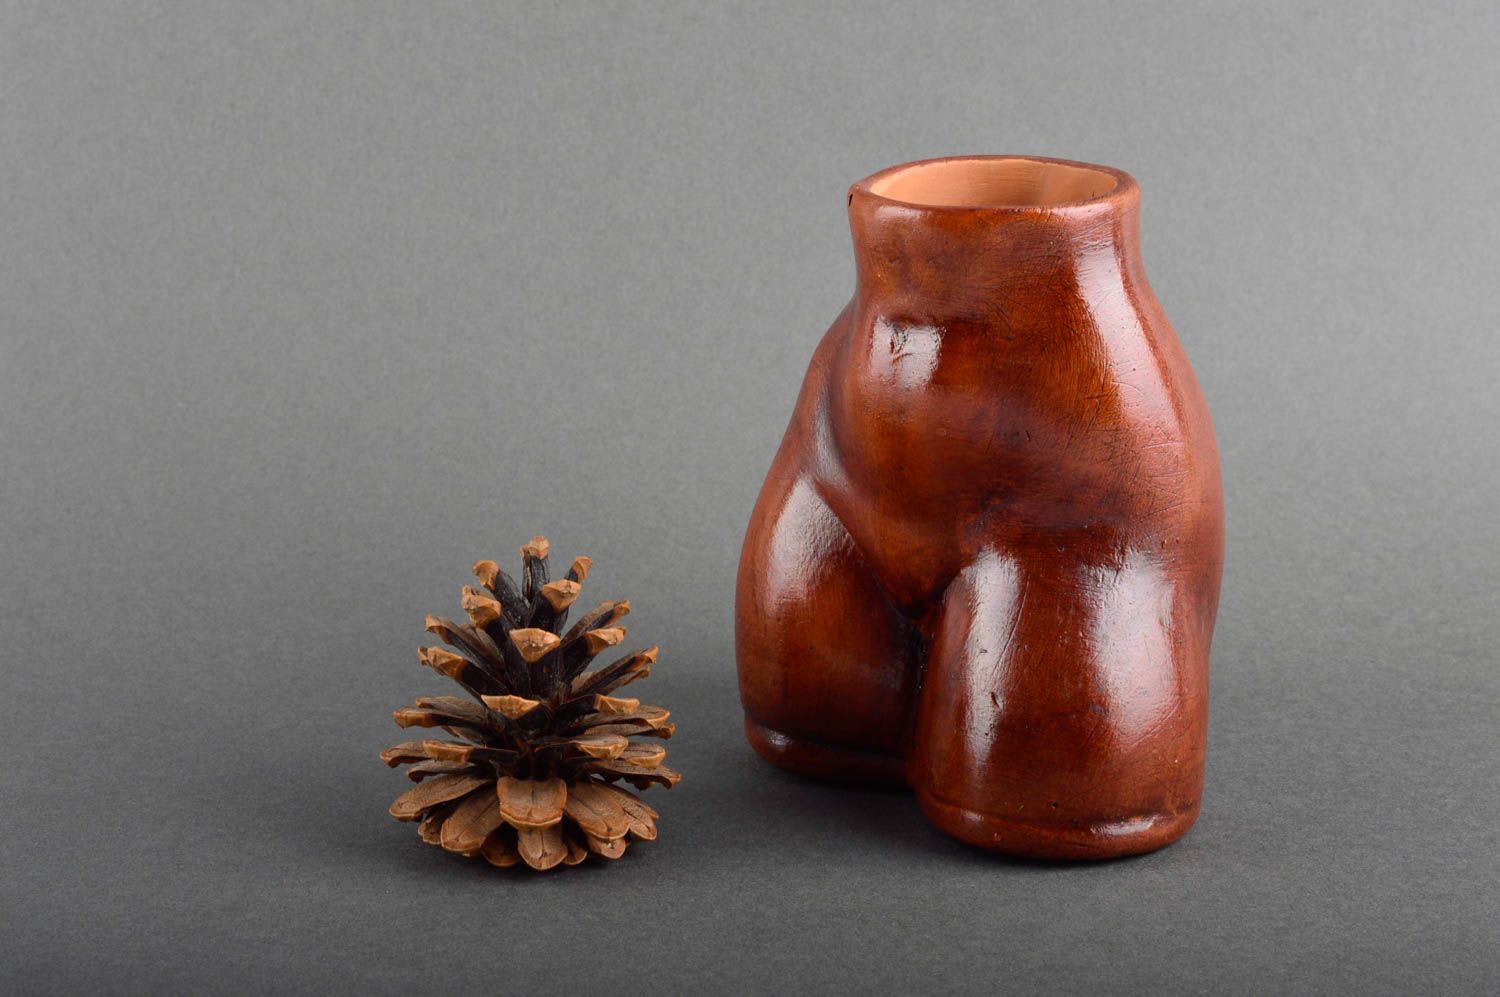 15 oz ceramic brown clay vase jug 4 inches tall 0,81 lb photo 1